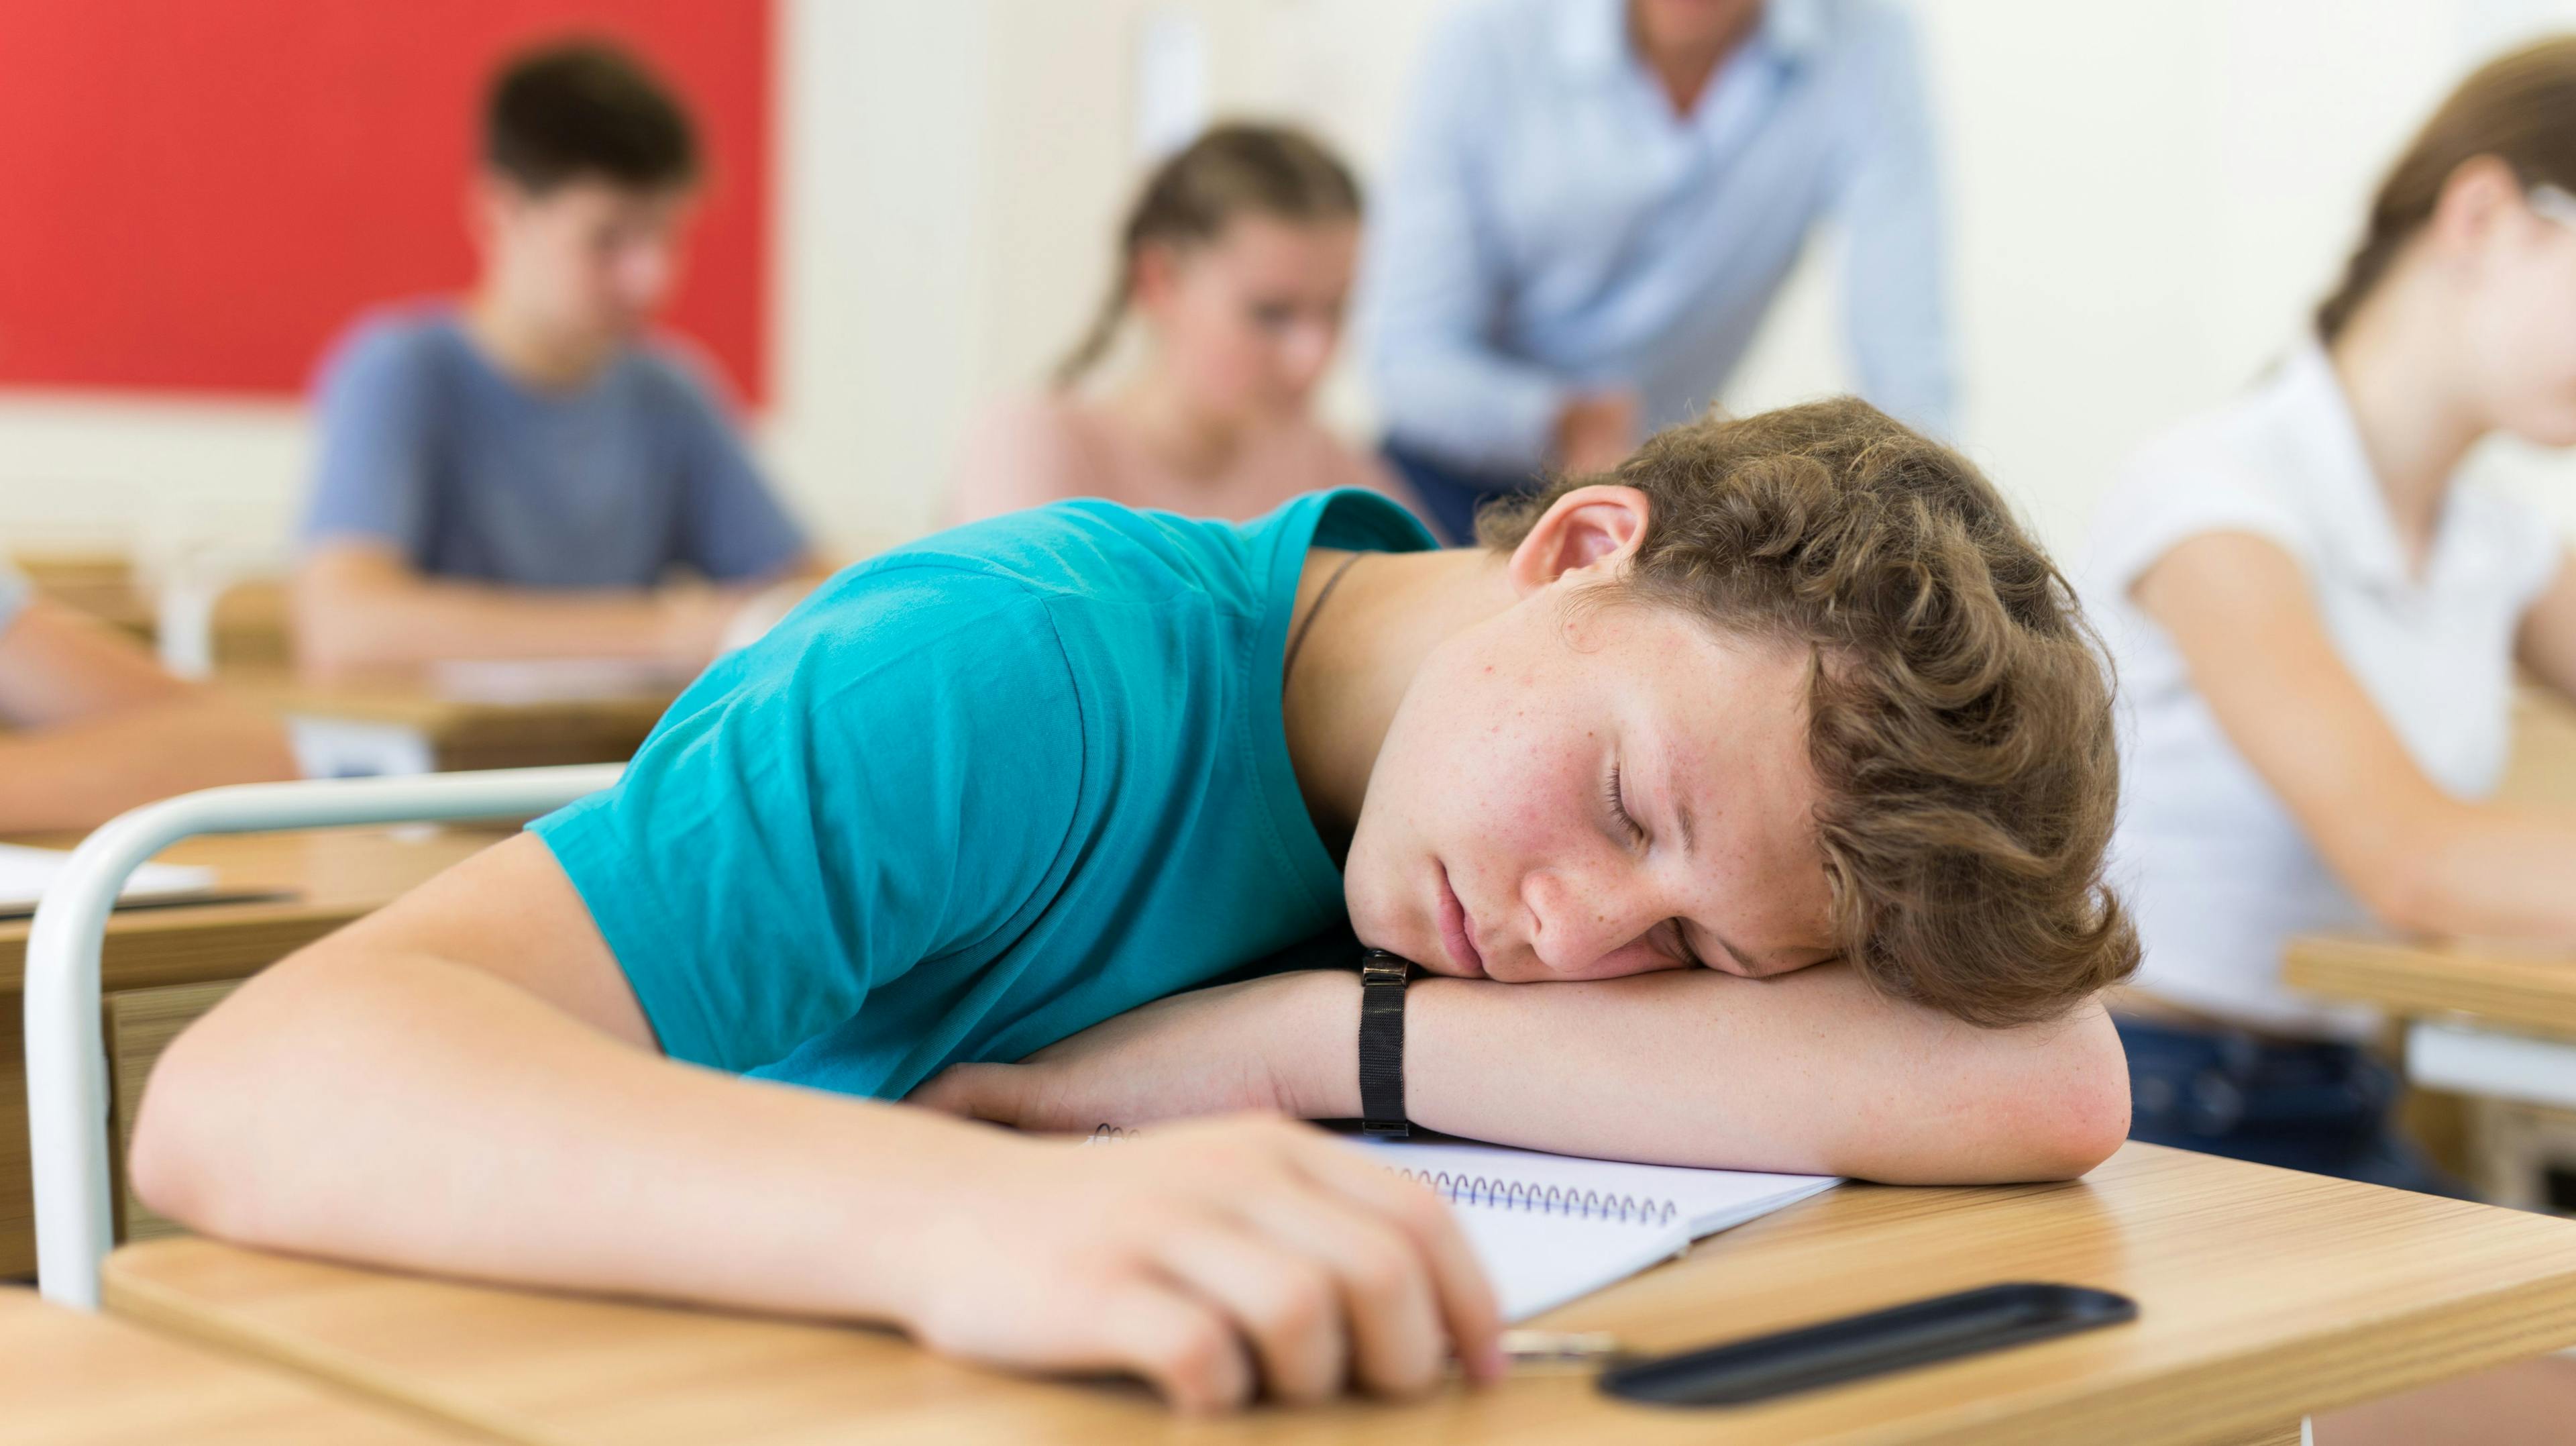 Teenager asleep at desk | Image credit: JackF - stock.adobe.com